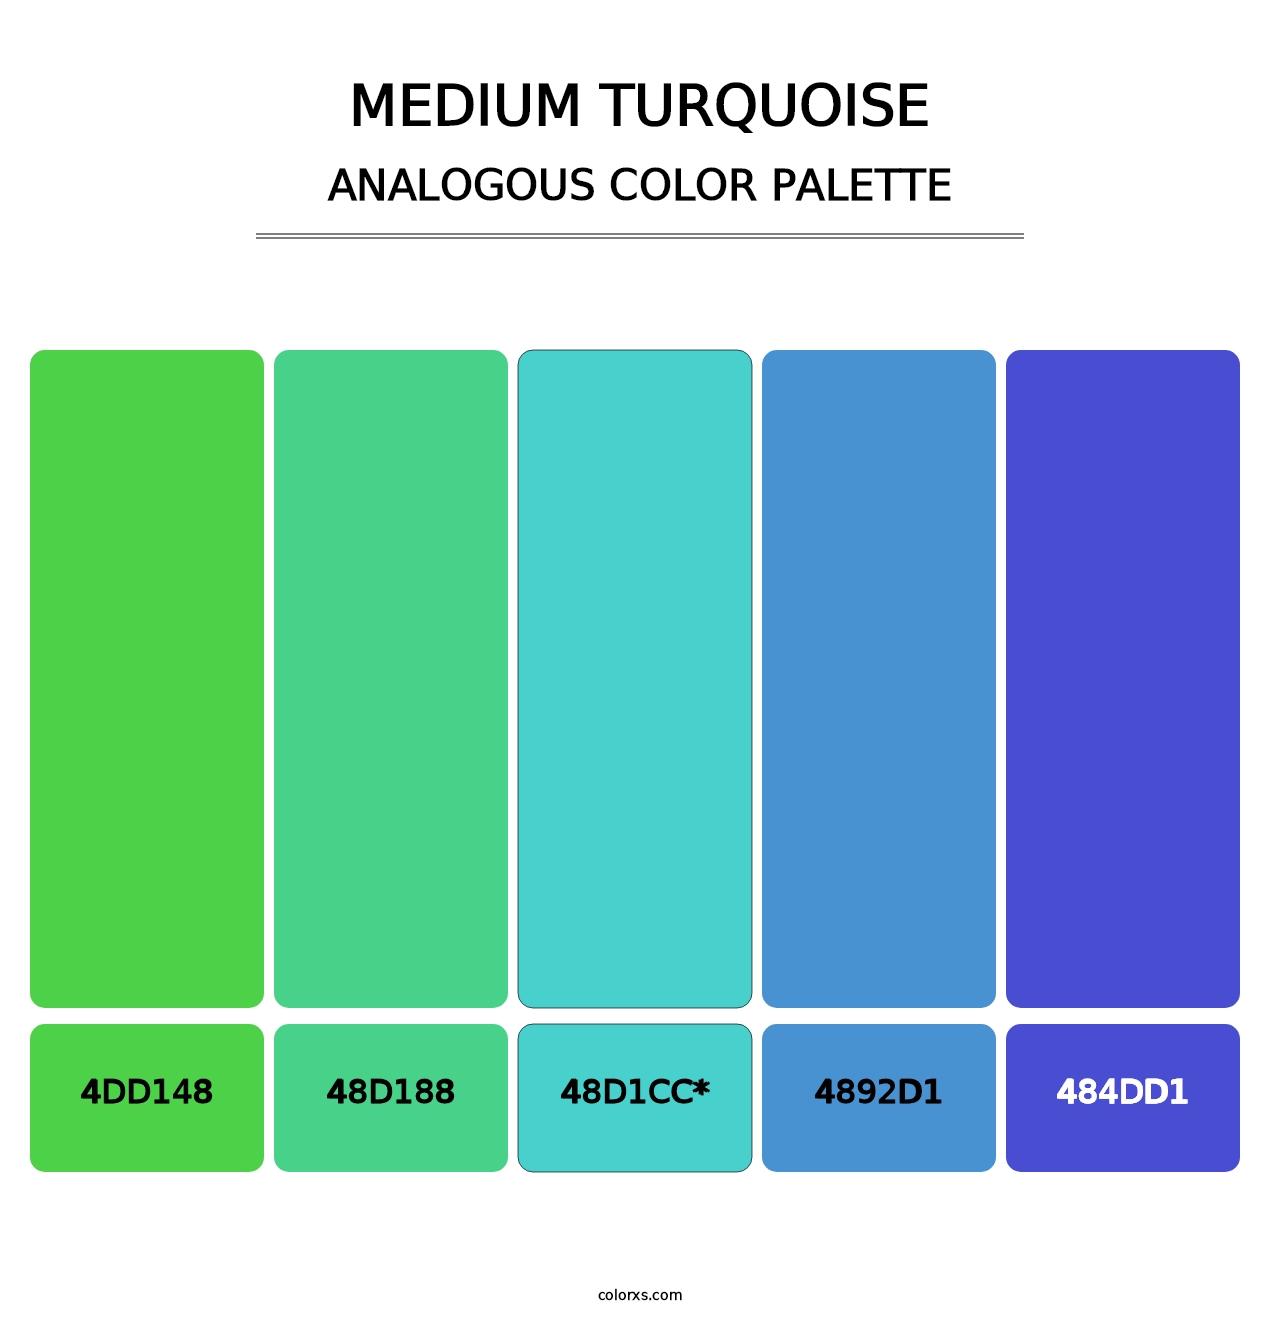 Medium Turquoise - Analogous Color Palette